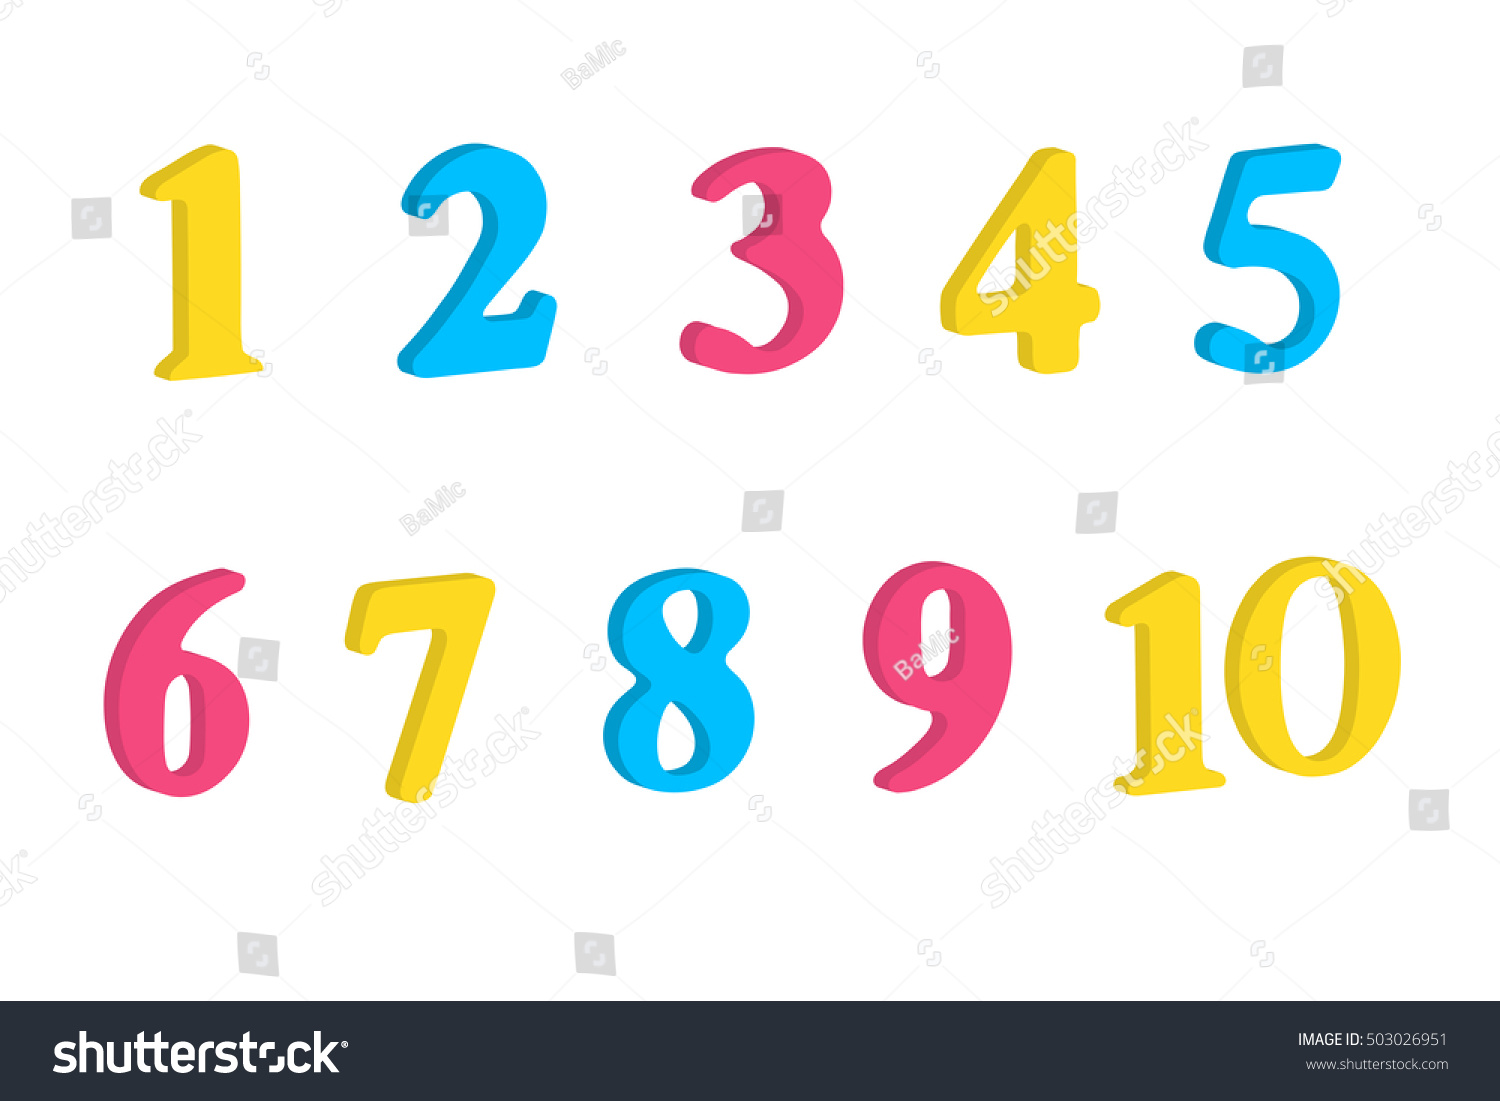 1-10 number set. colorful illustration isolated on white background #503026951